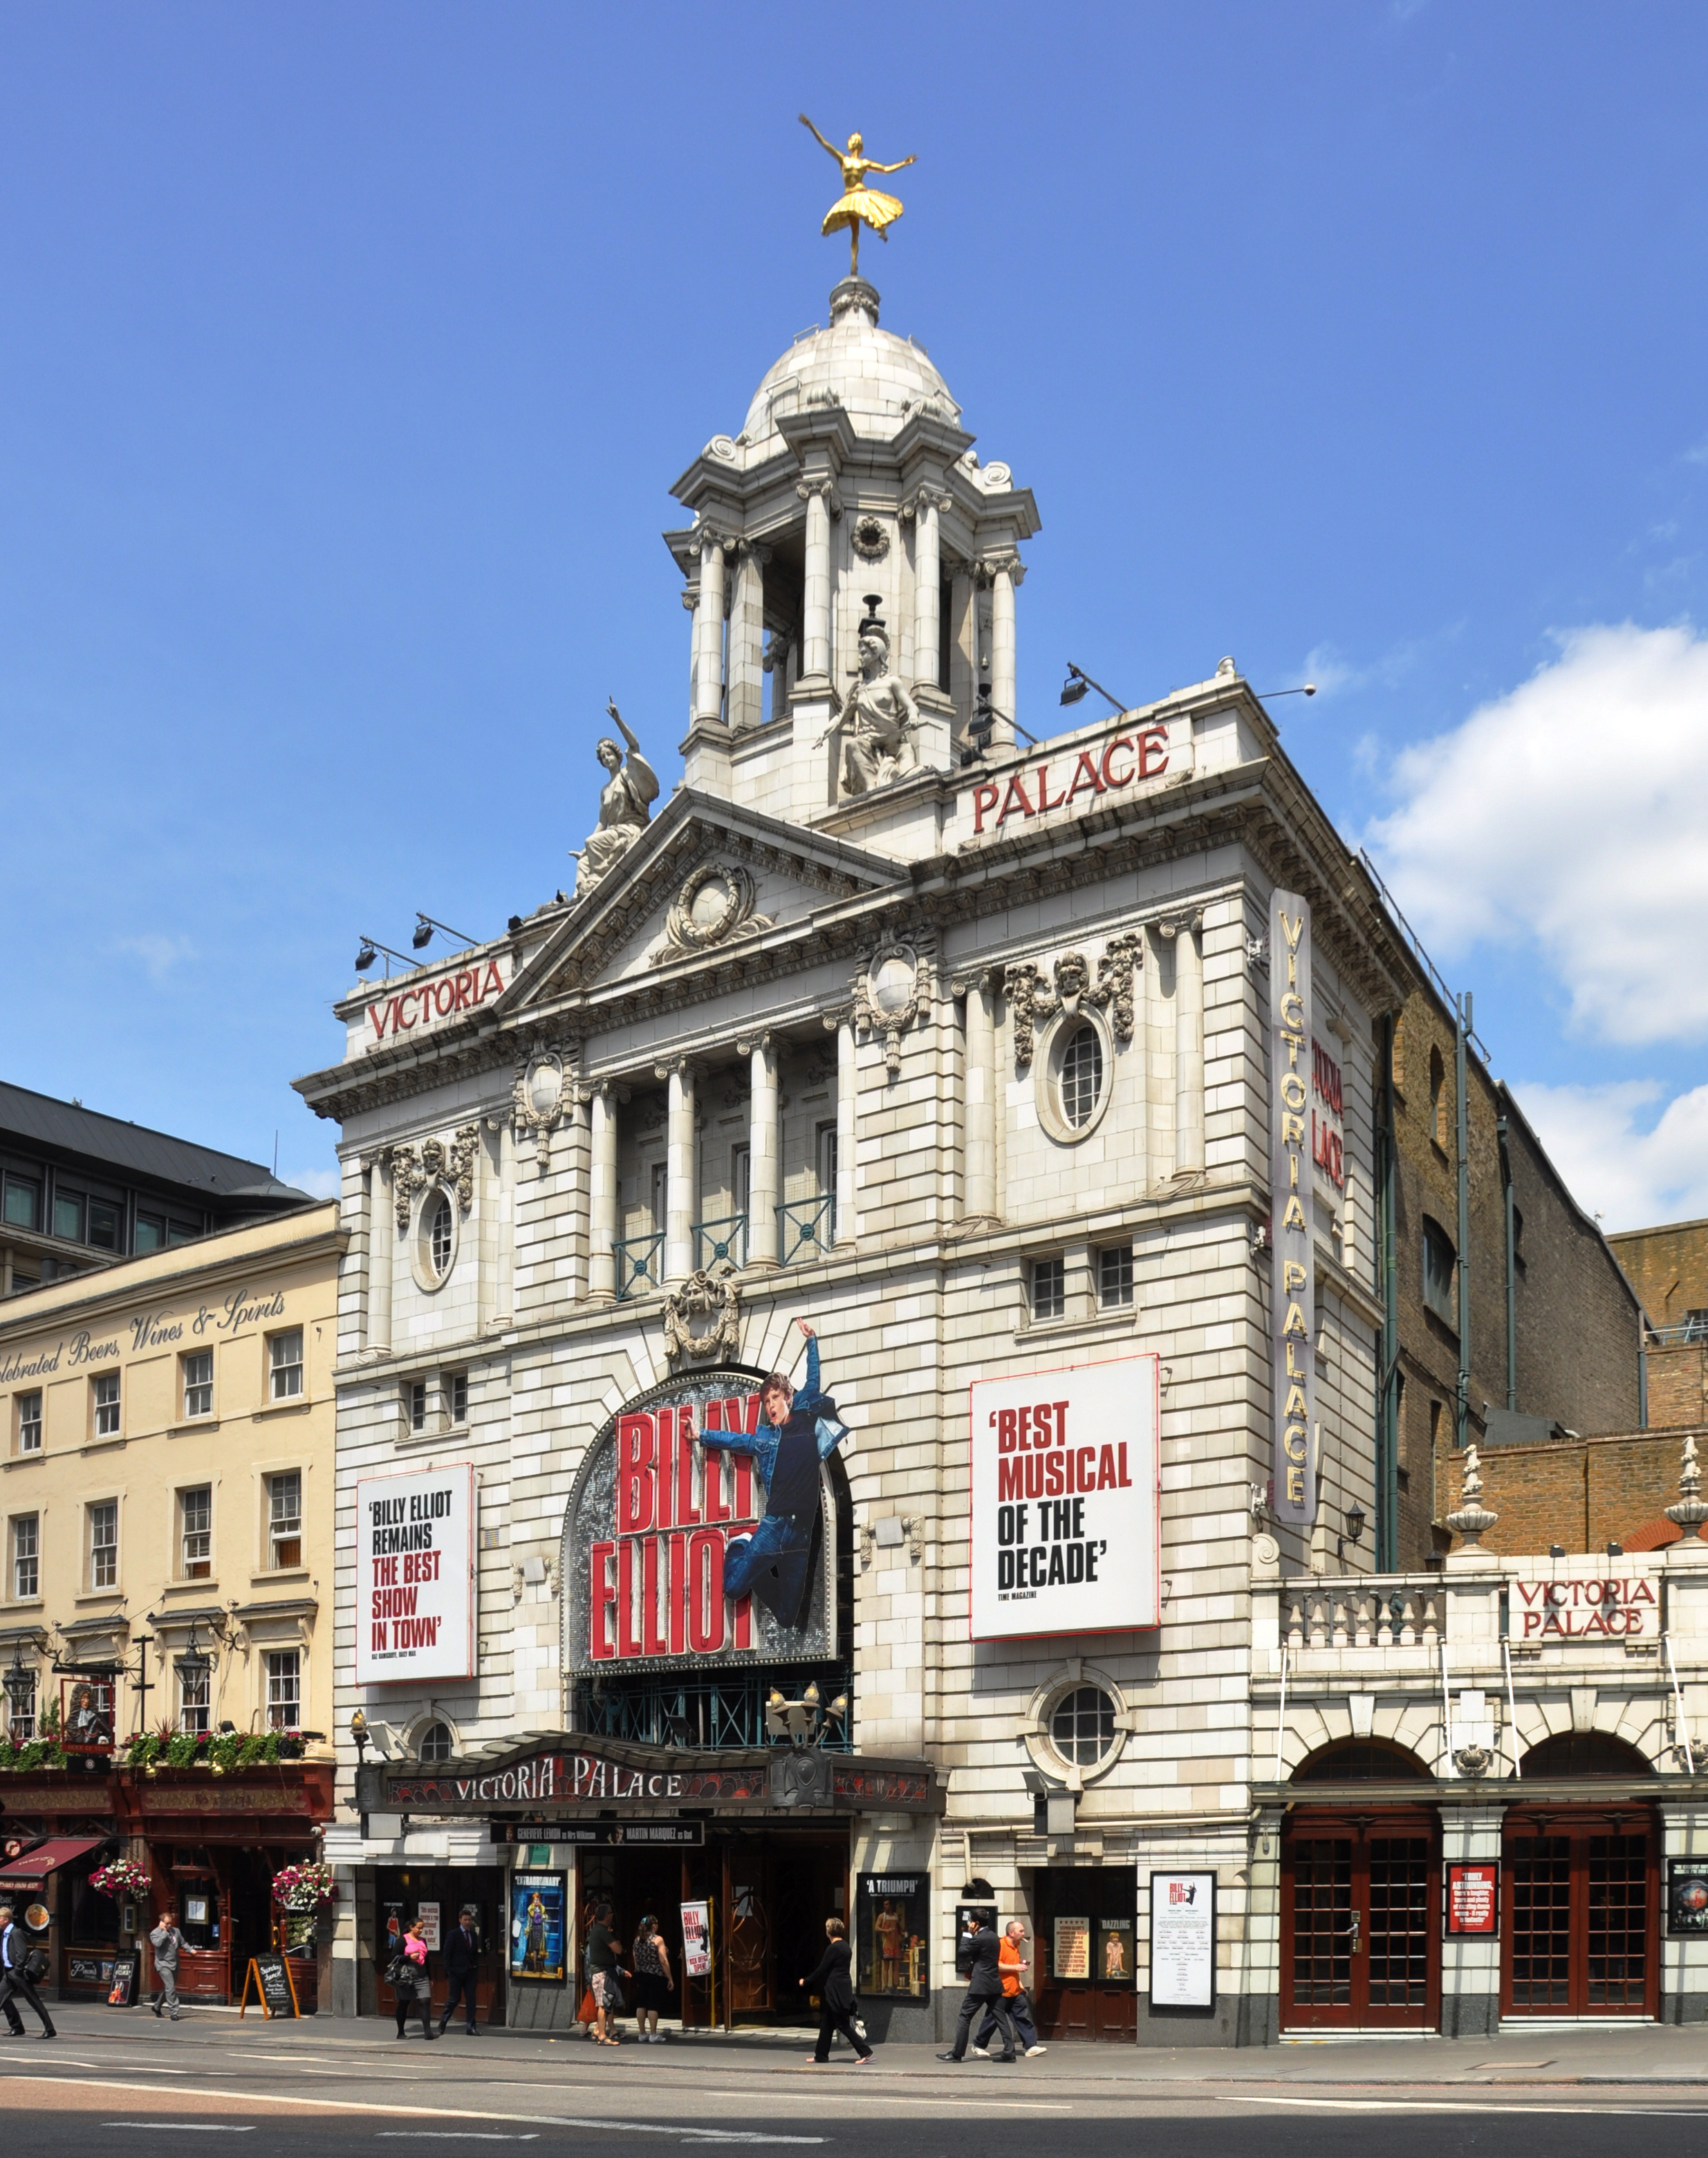 UK - London - Victoria Palace Theatre - Theatrecrafts.com